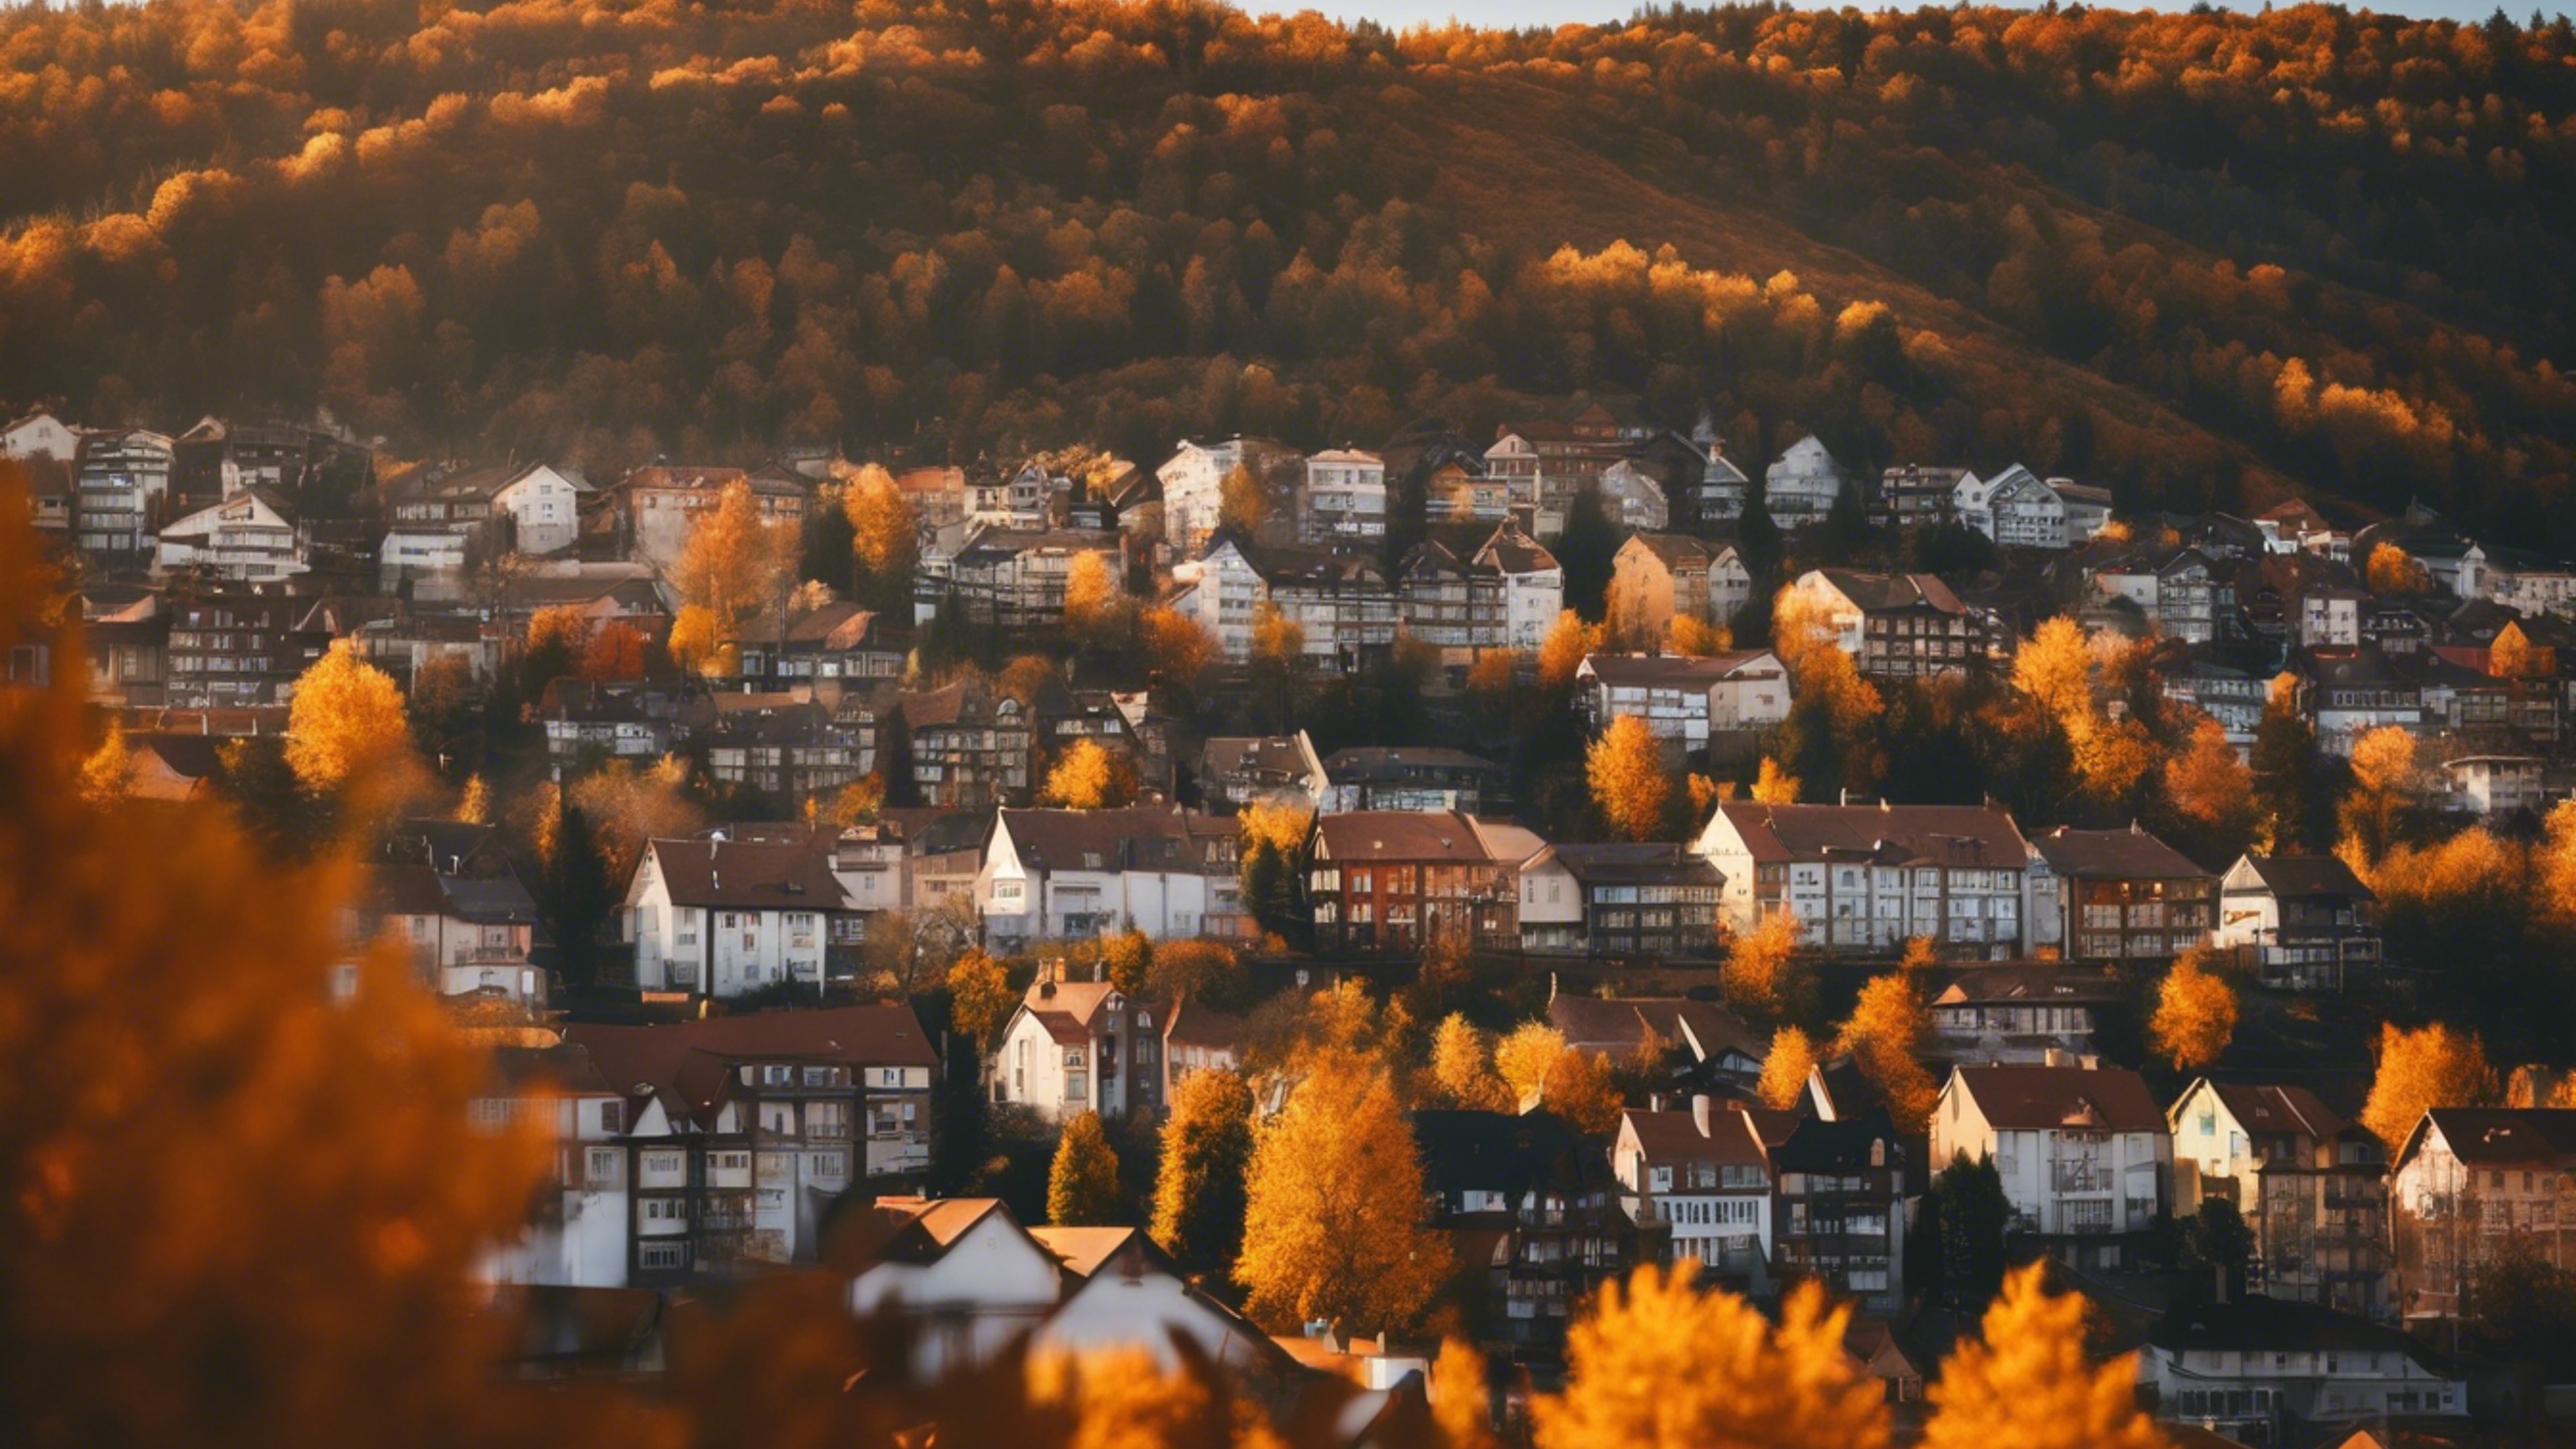 A calm skyline view of a mountain town in autumn, dappled in hues of orange and gold. Tapetai[cb2d4b5eada64efeb989]